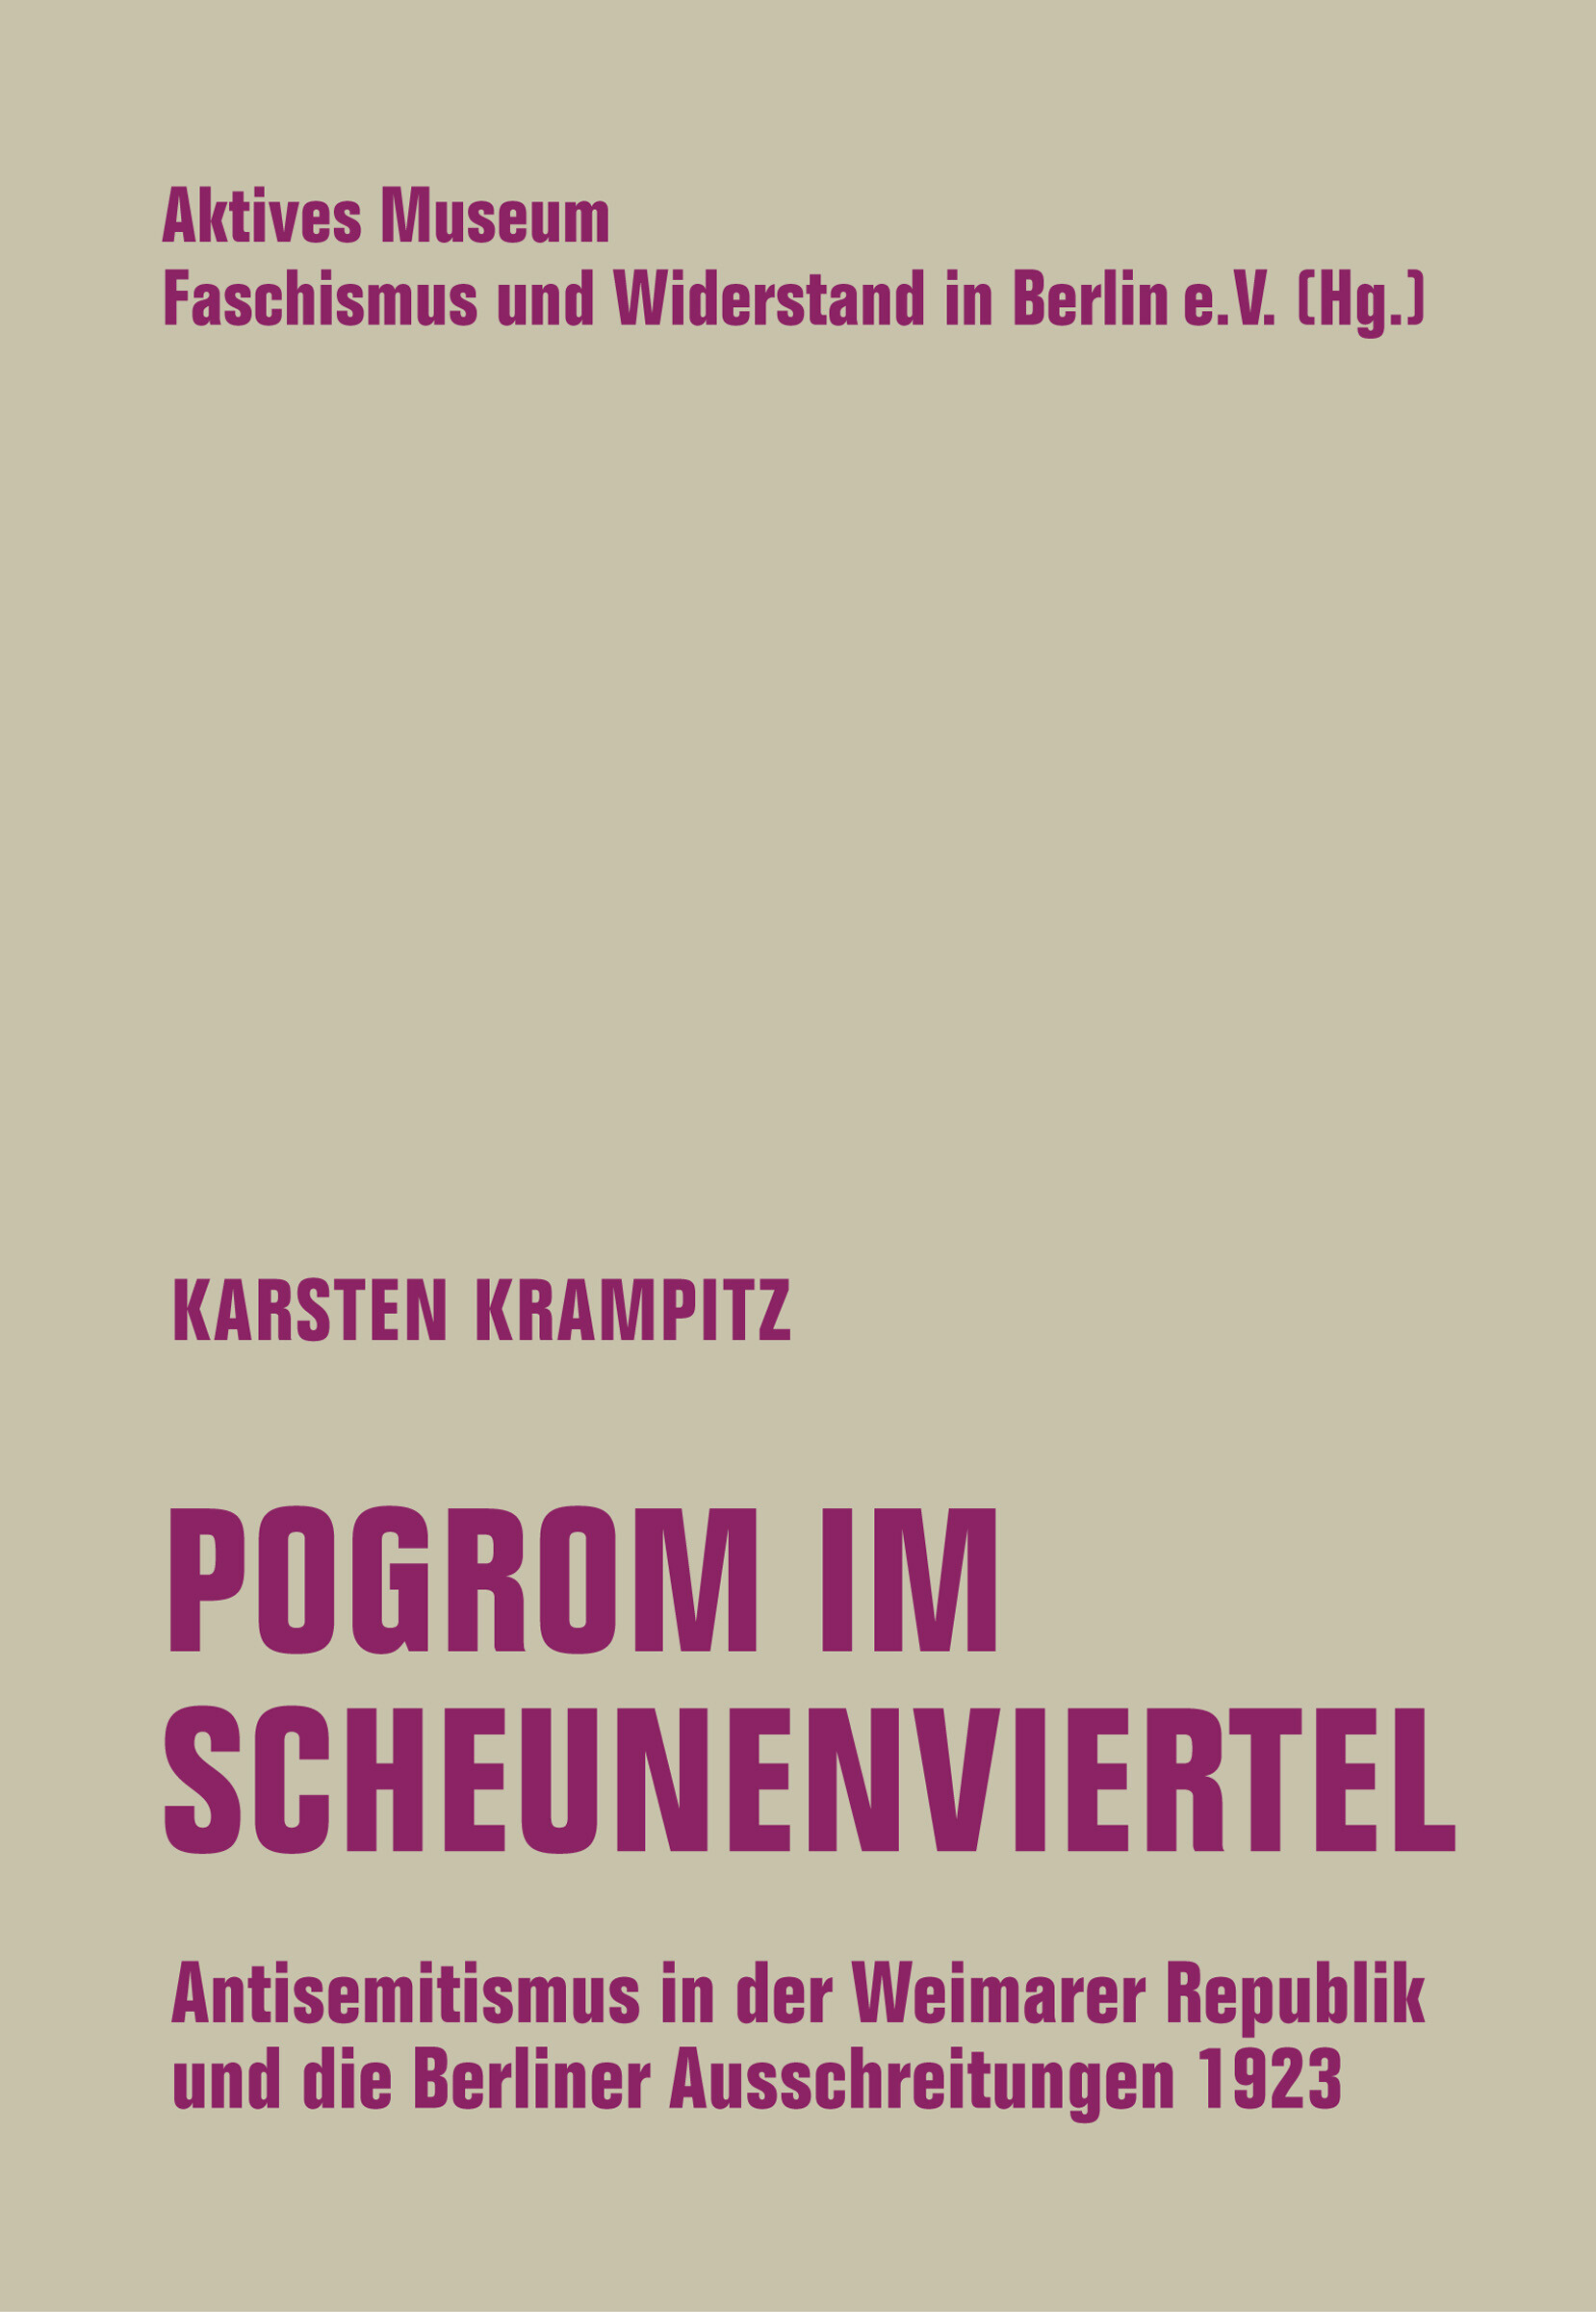 pogrom-im-scheunenviertel_cover.jpg